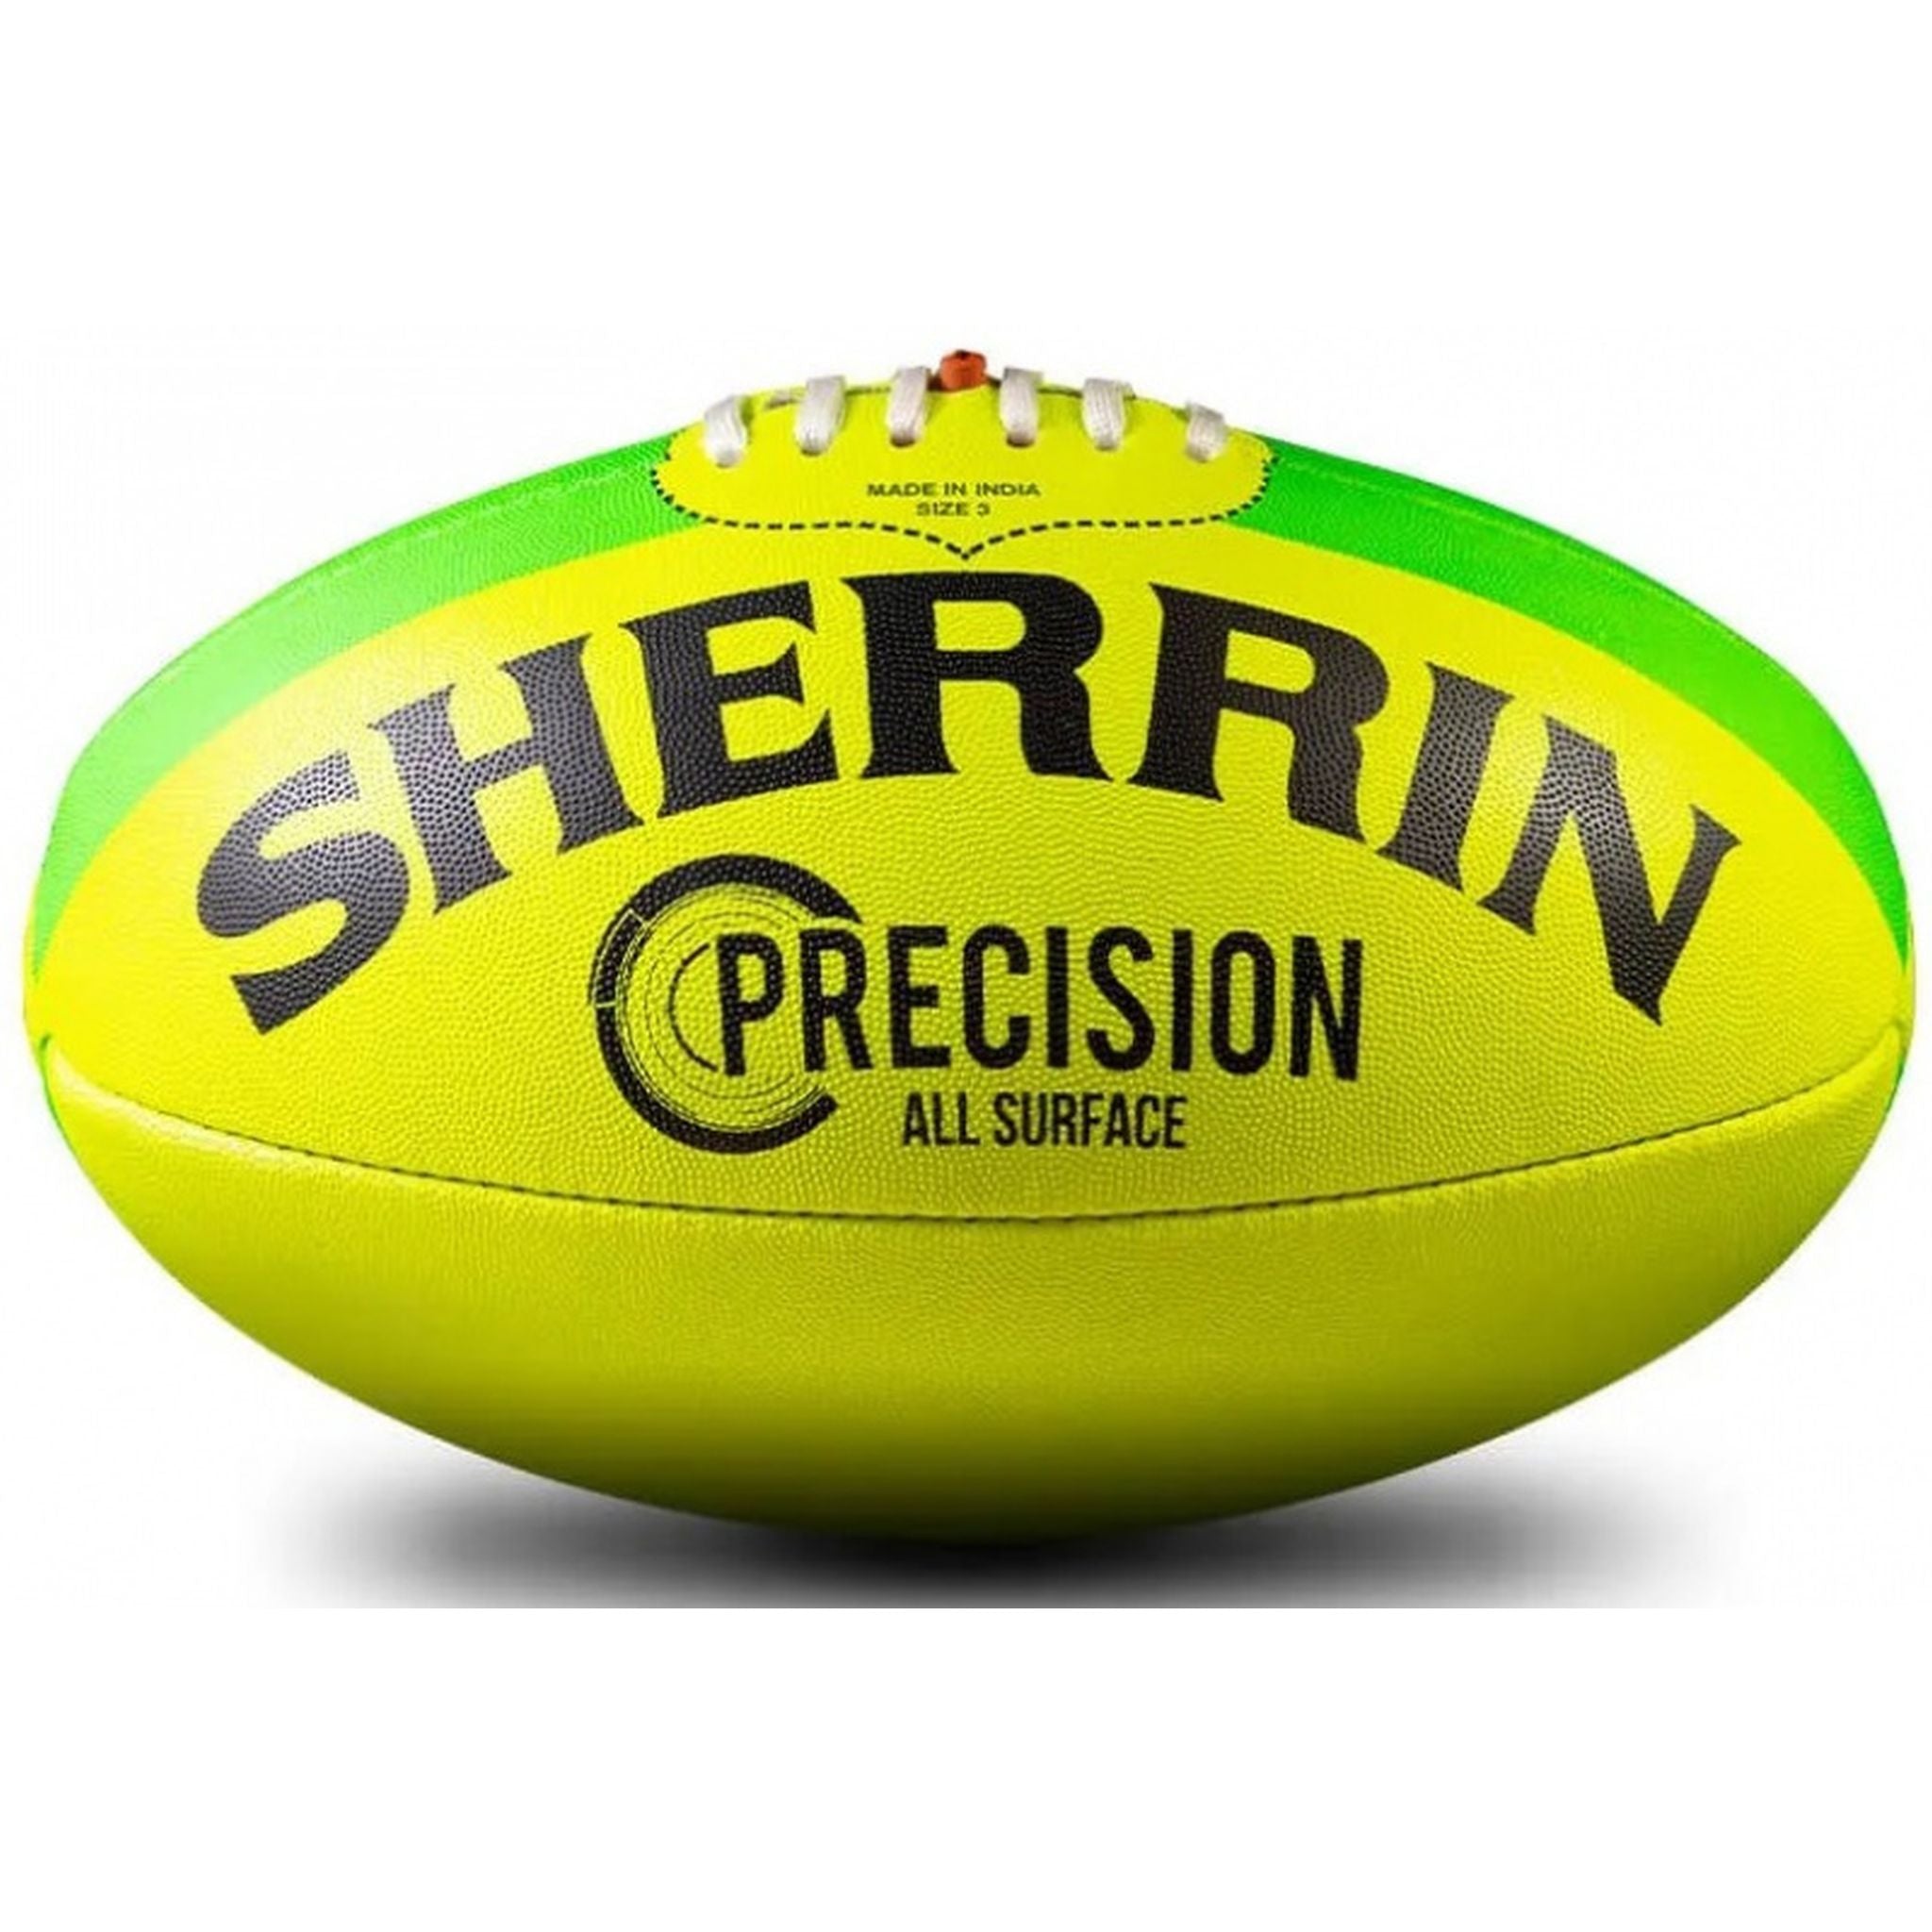 Sherrin Precision Synthetic Football